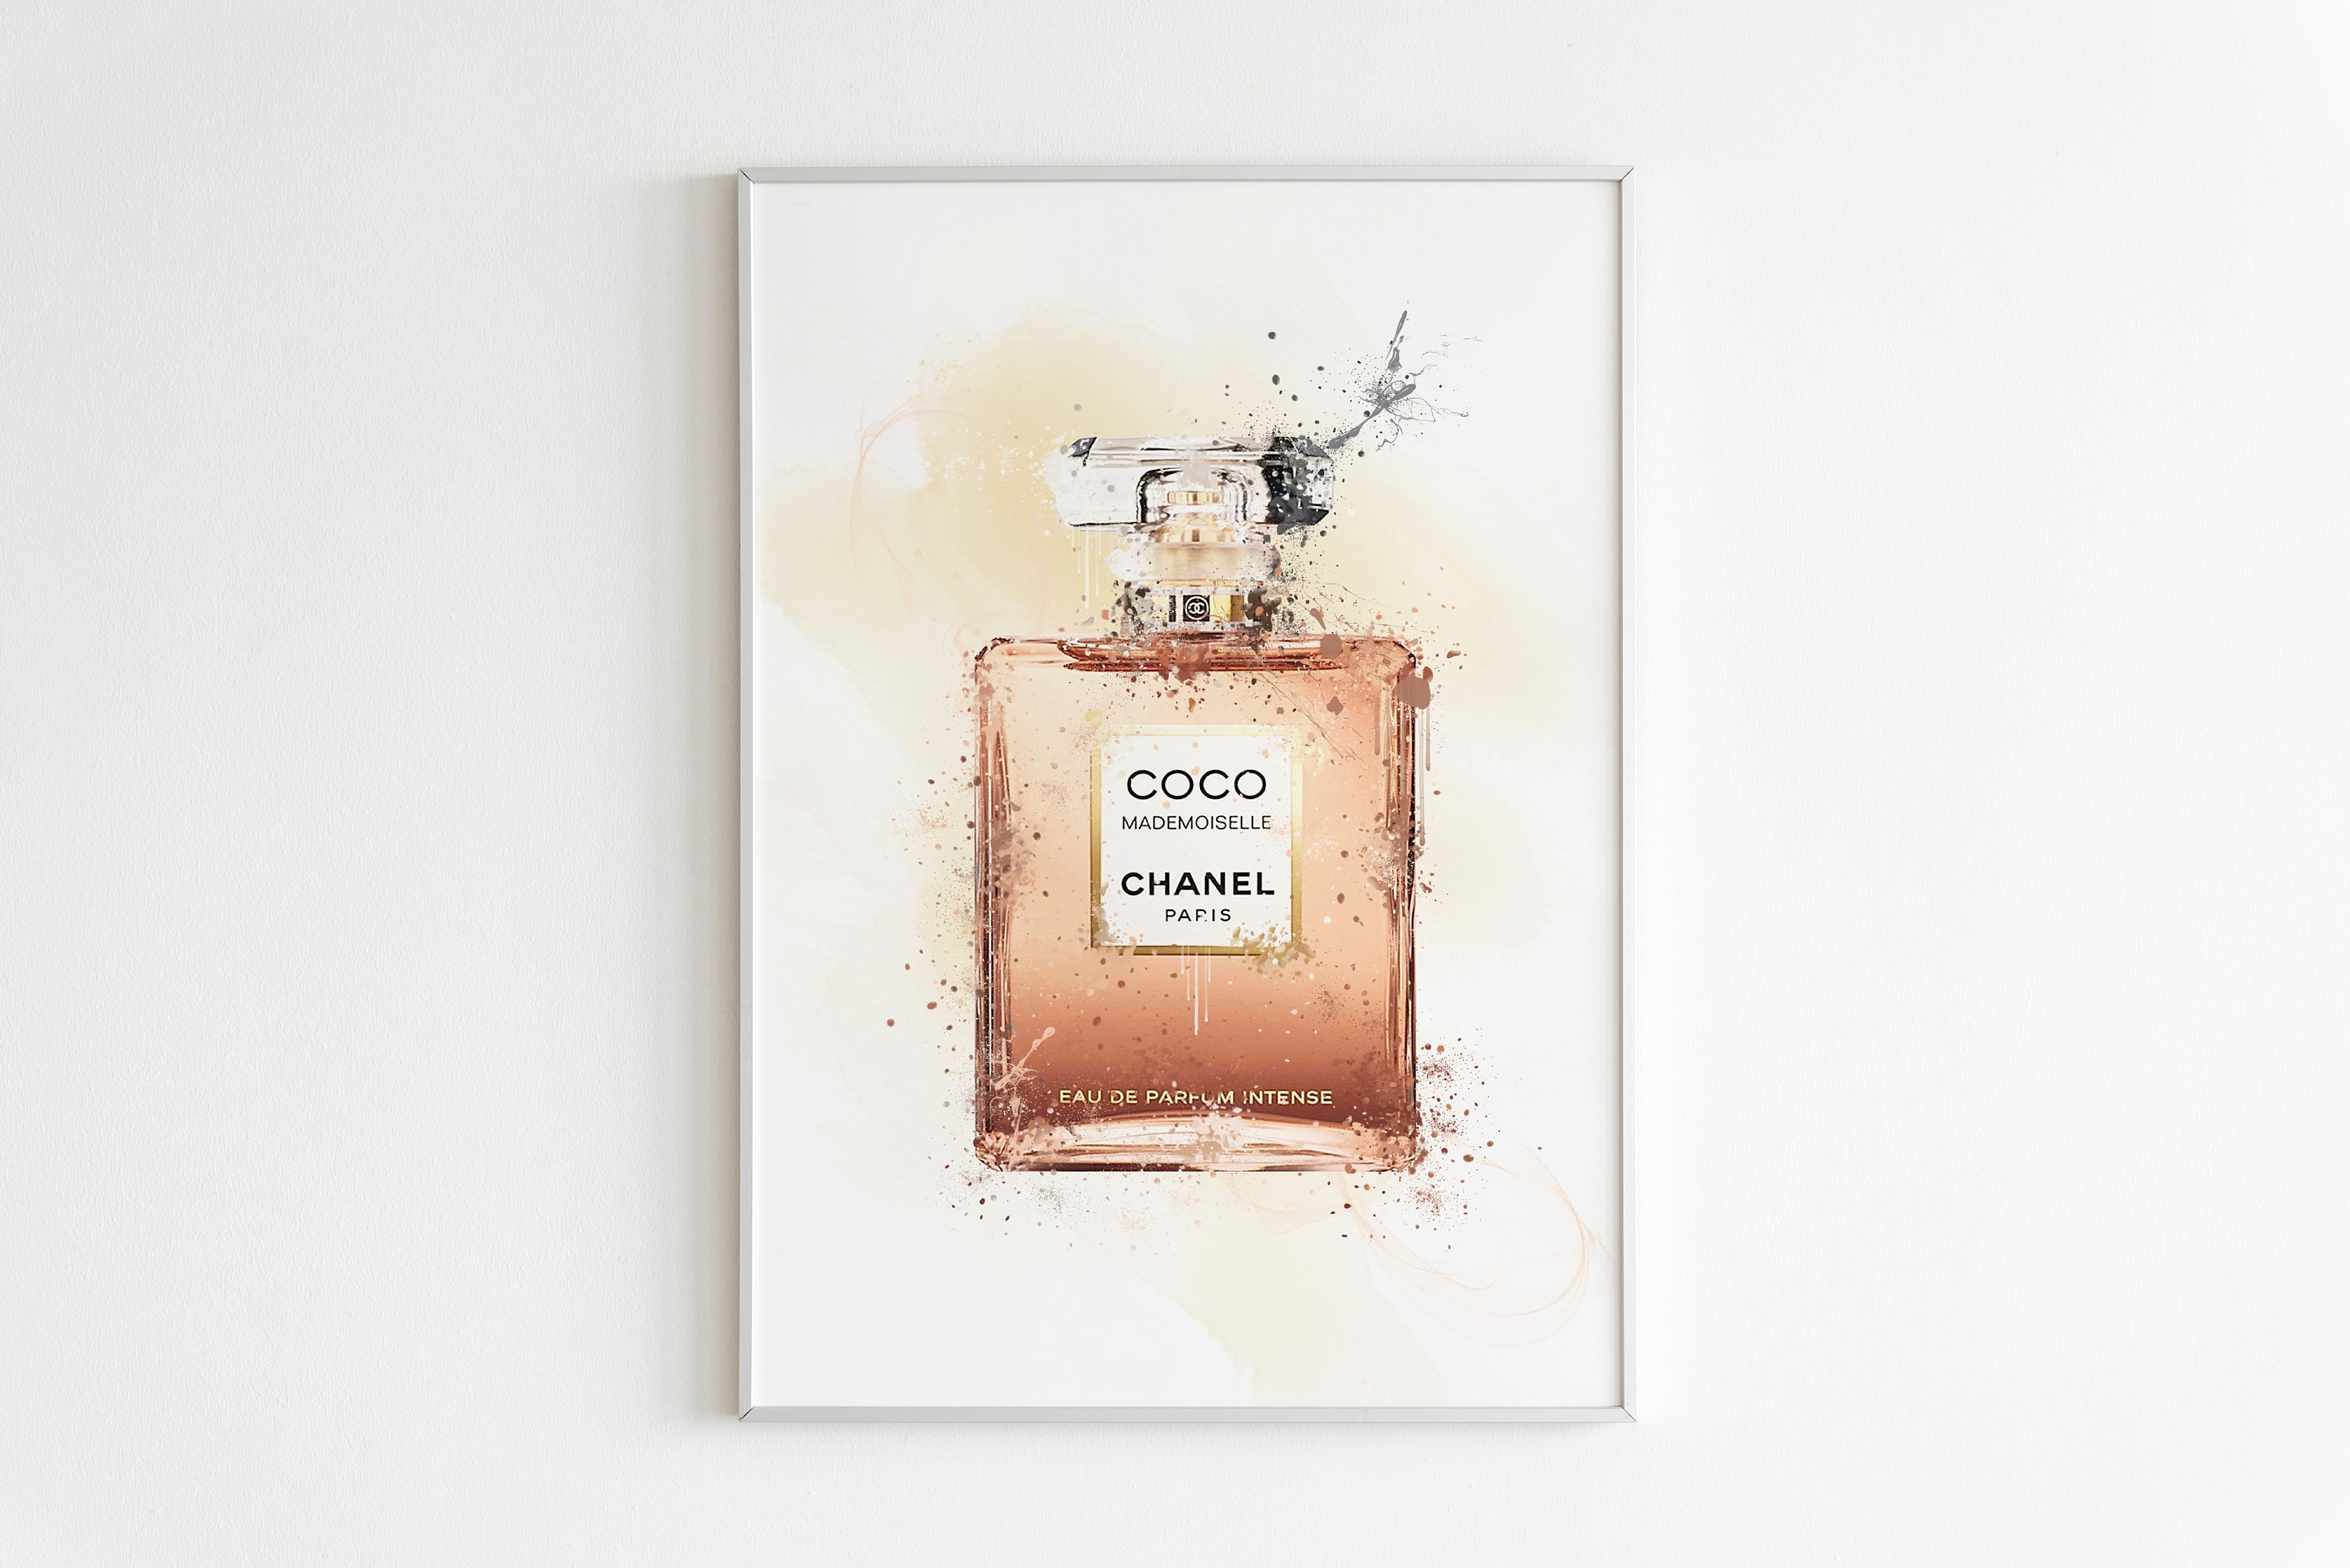 Chanel Coco Perfume Bottle Wall Art 